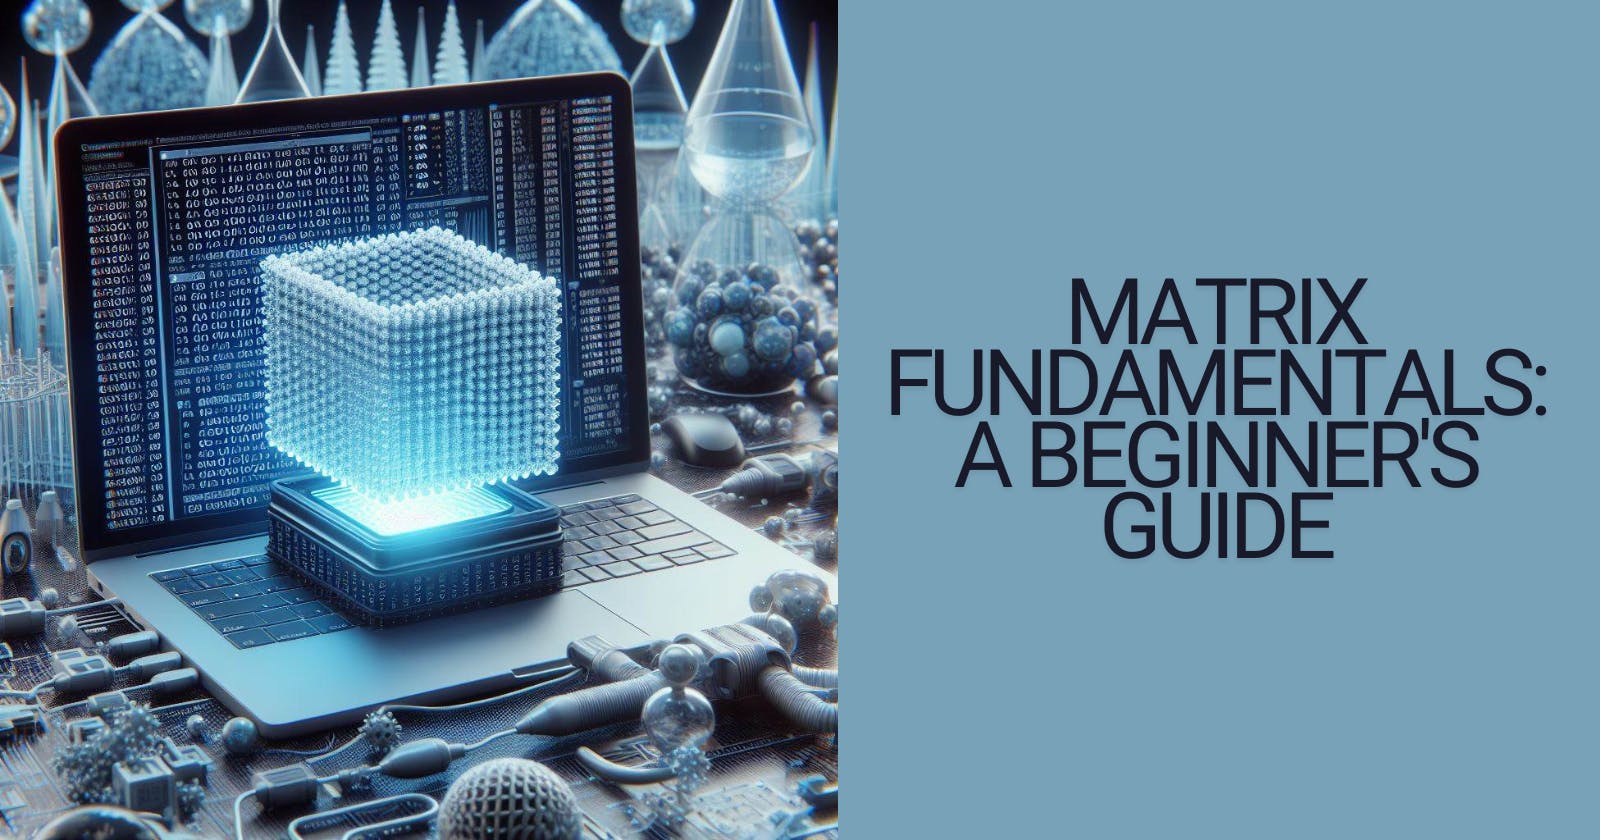 Matrix Fundamentals: A Beginner's Guide